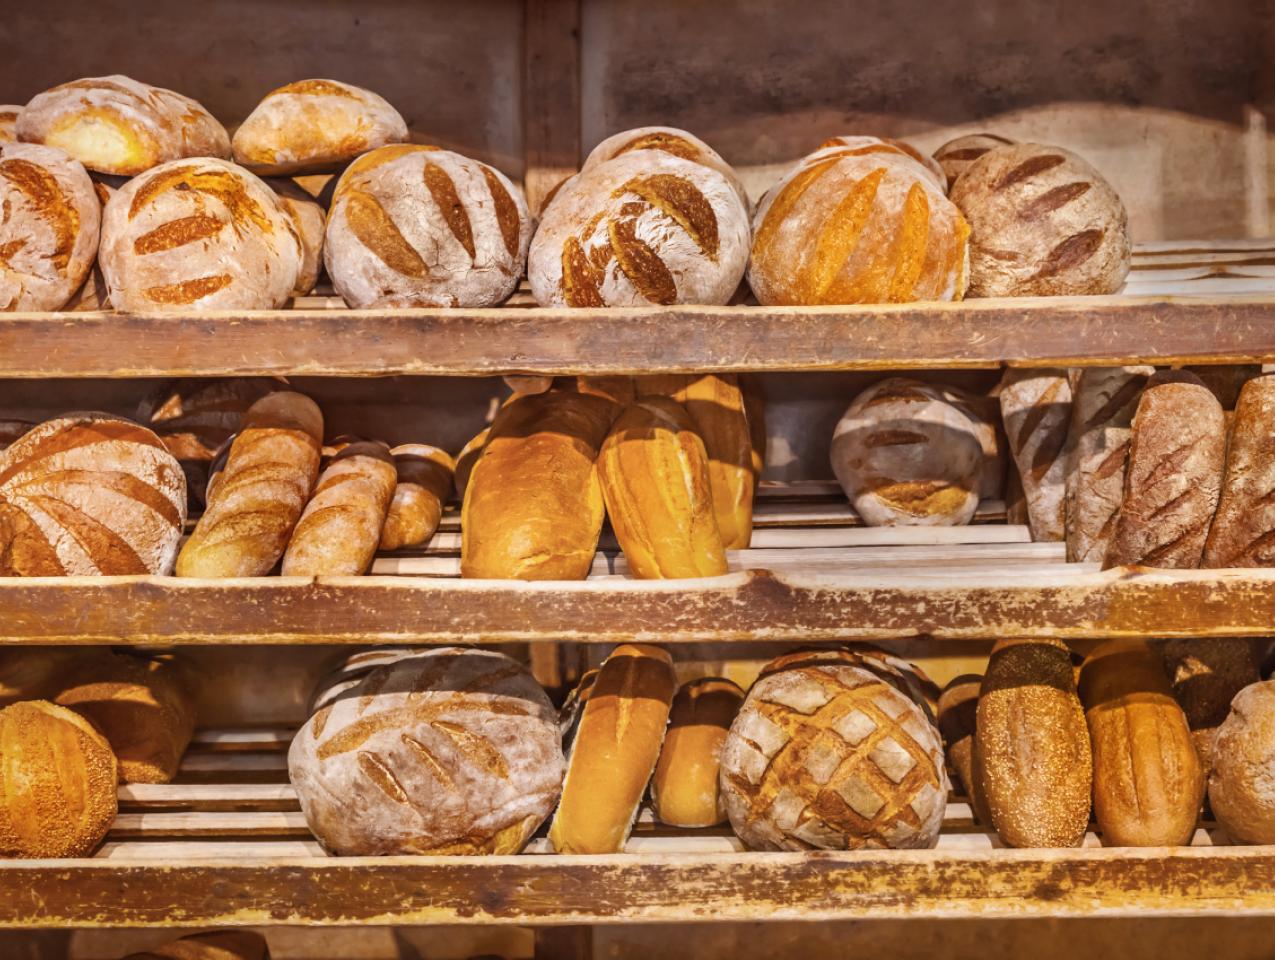 bakerybread   image